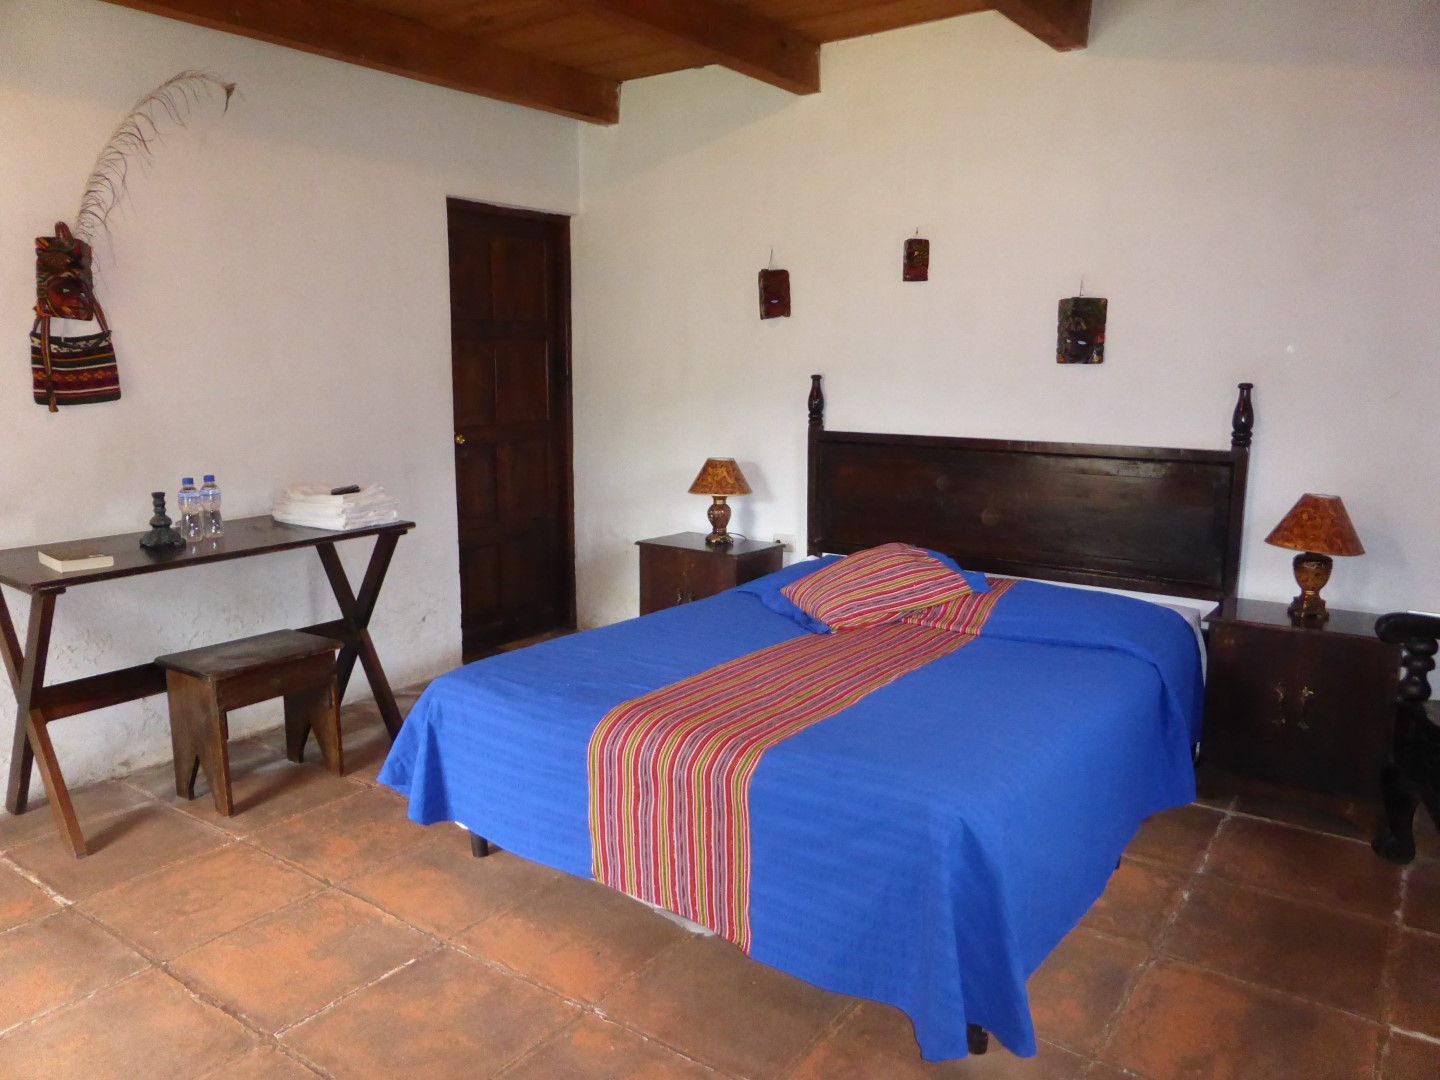 Room at Hacienda Mil Amores in Ixil Triangle, Guatemala